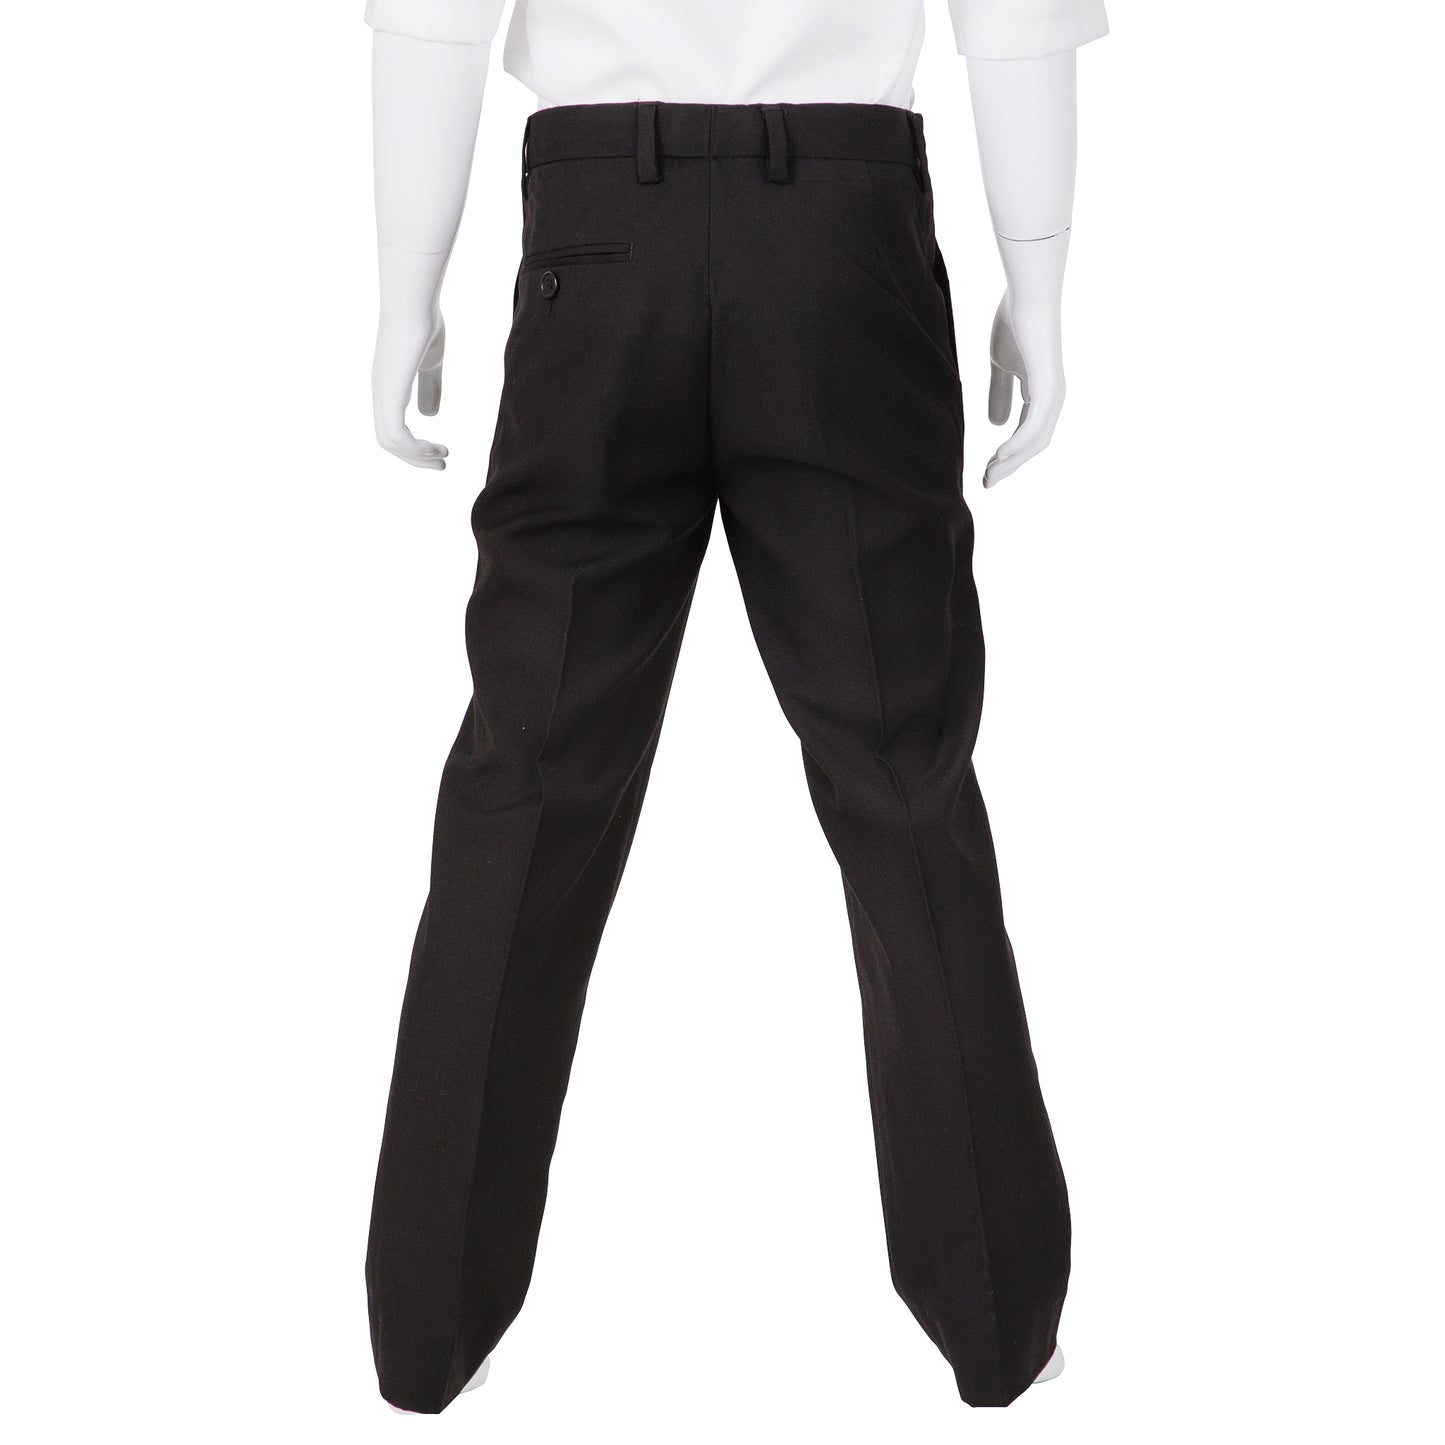 David Oliver Boys Tailored Fit Dress Pants   CODY BLACK